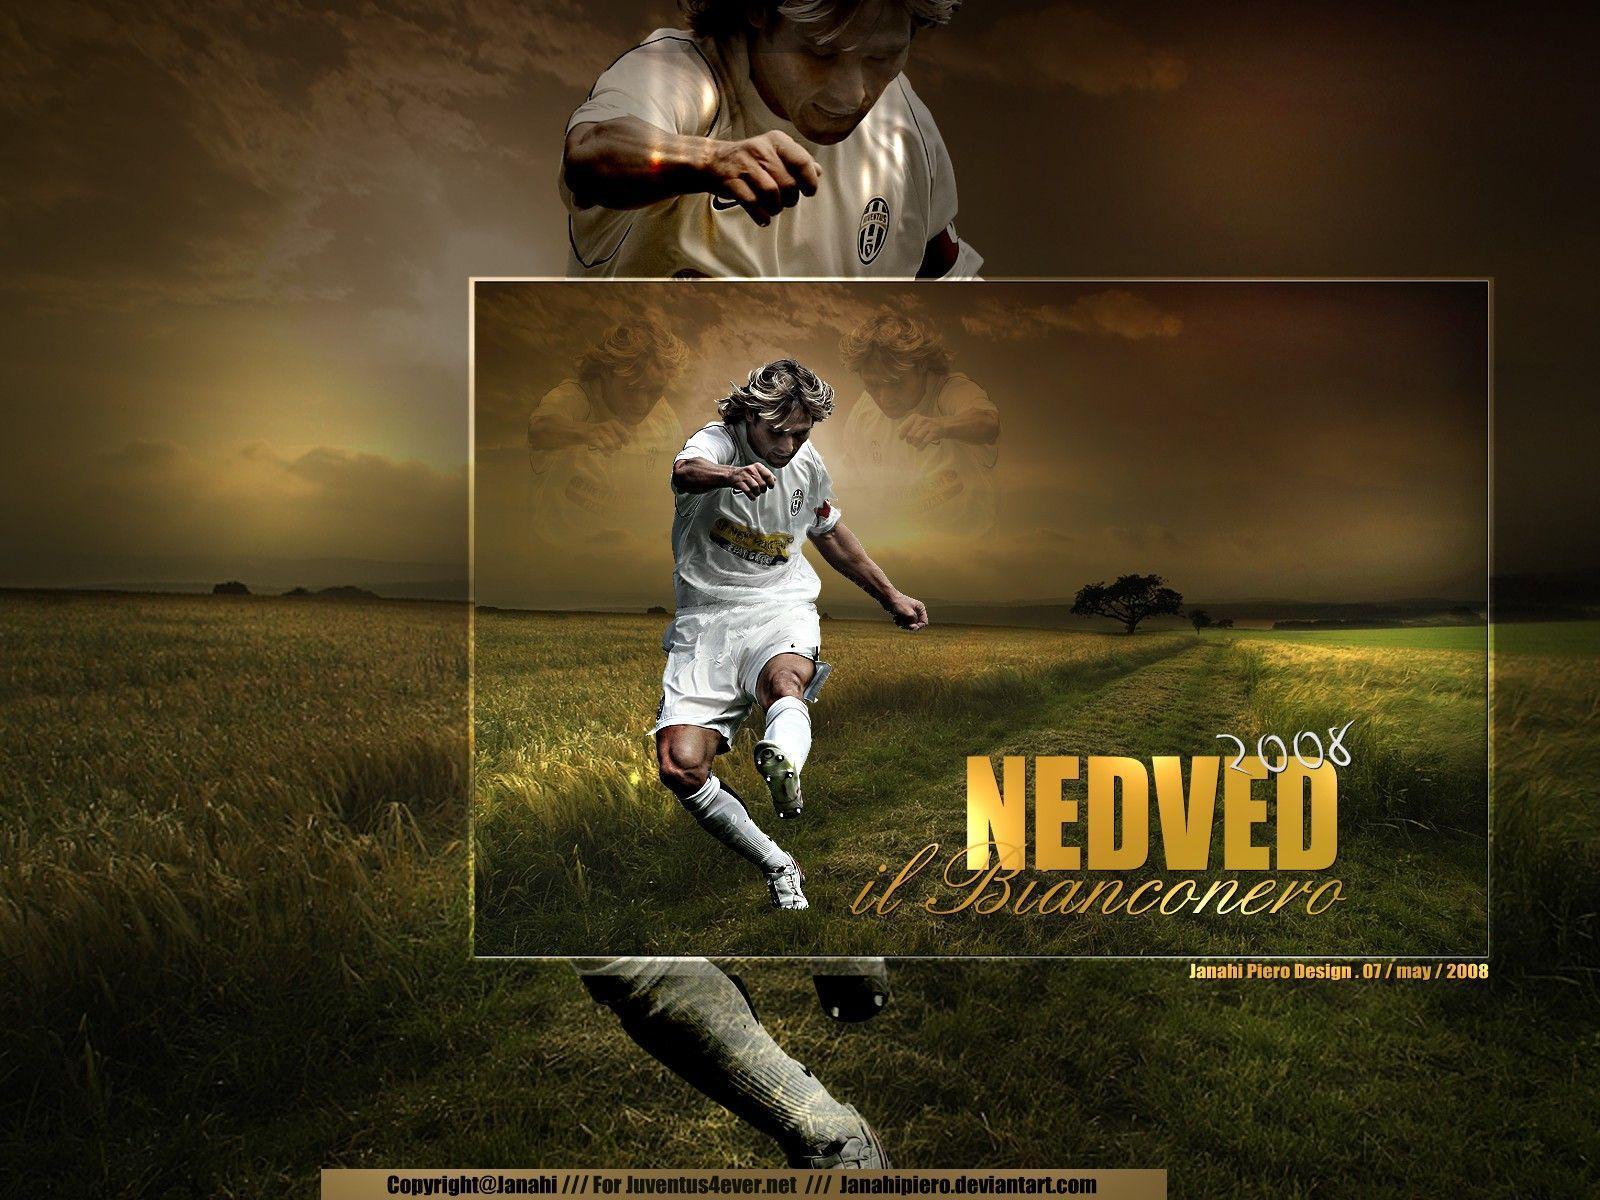 Football Player's Biography 7: Pavel Nedvěd